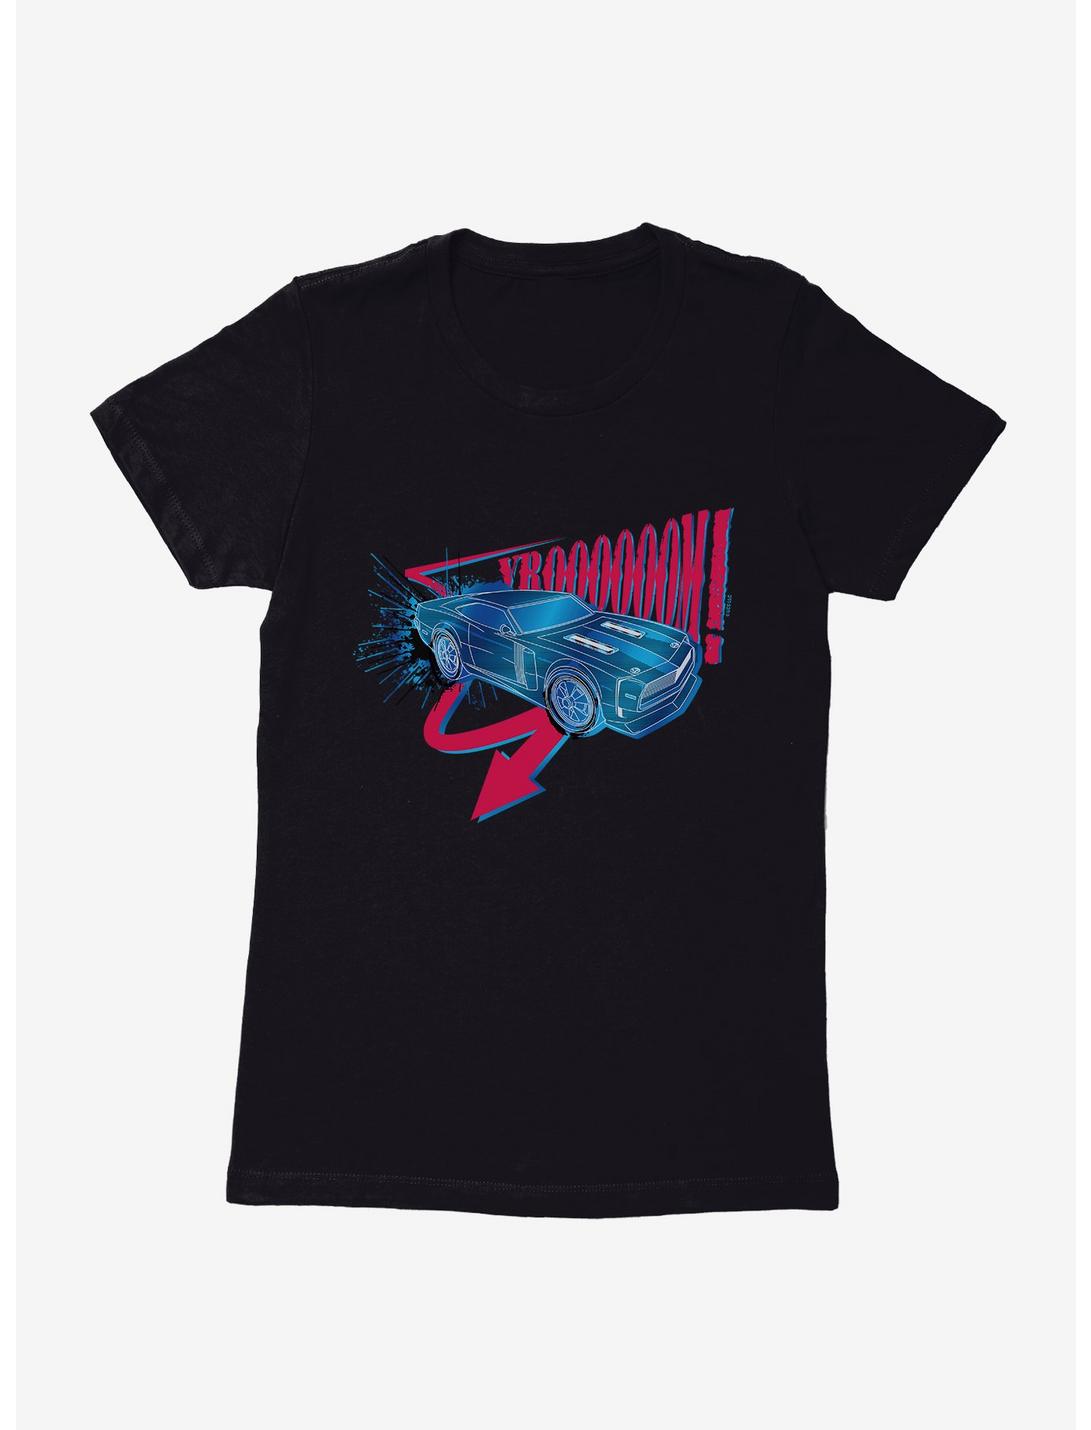 Fast & Furious Vroom! Womens T-Shirt, BLACK, hi-res